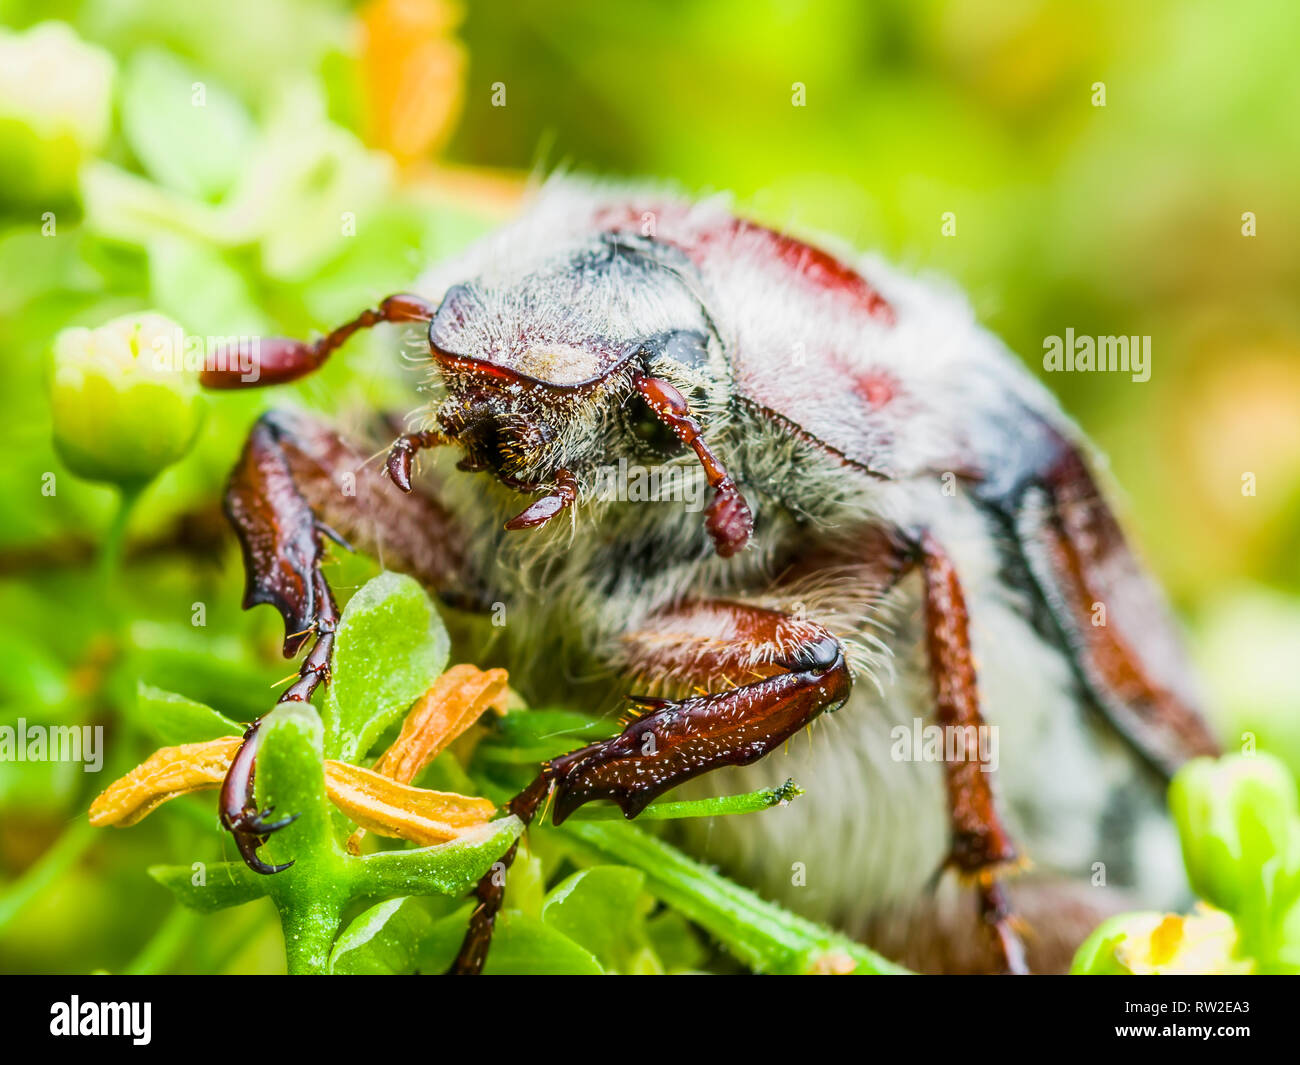 Cockchafer Melolontha peut Beetle Bug insecte Macro Banque D'Images